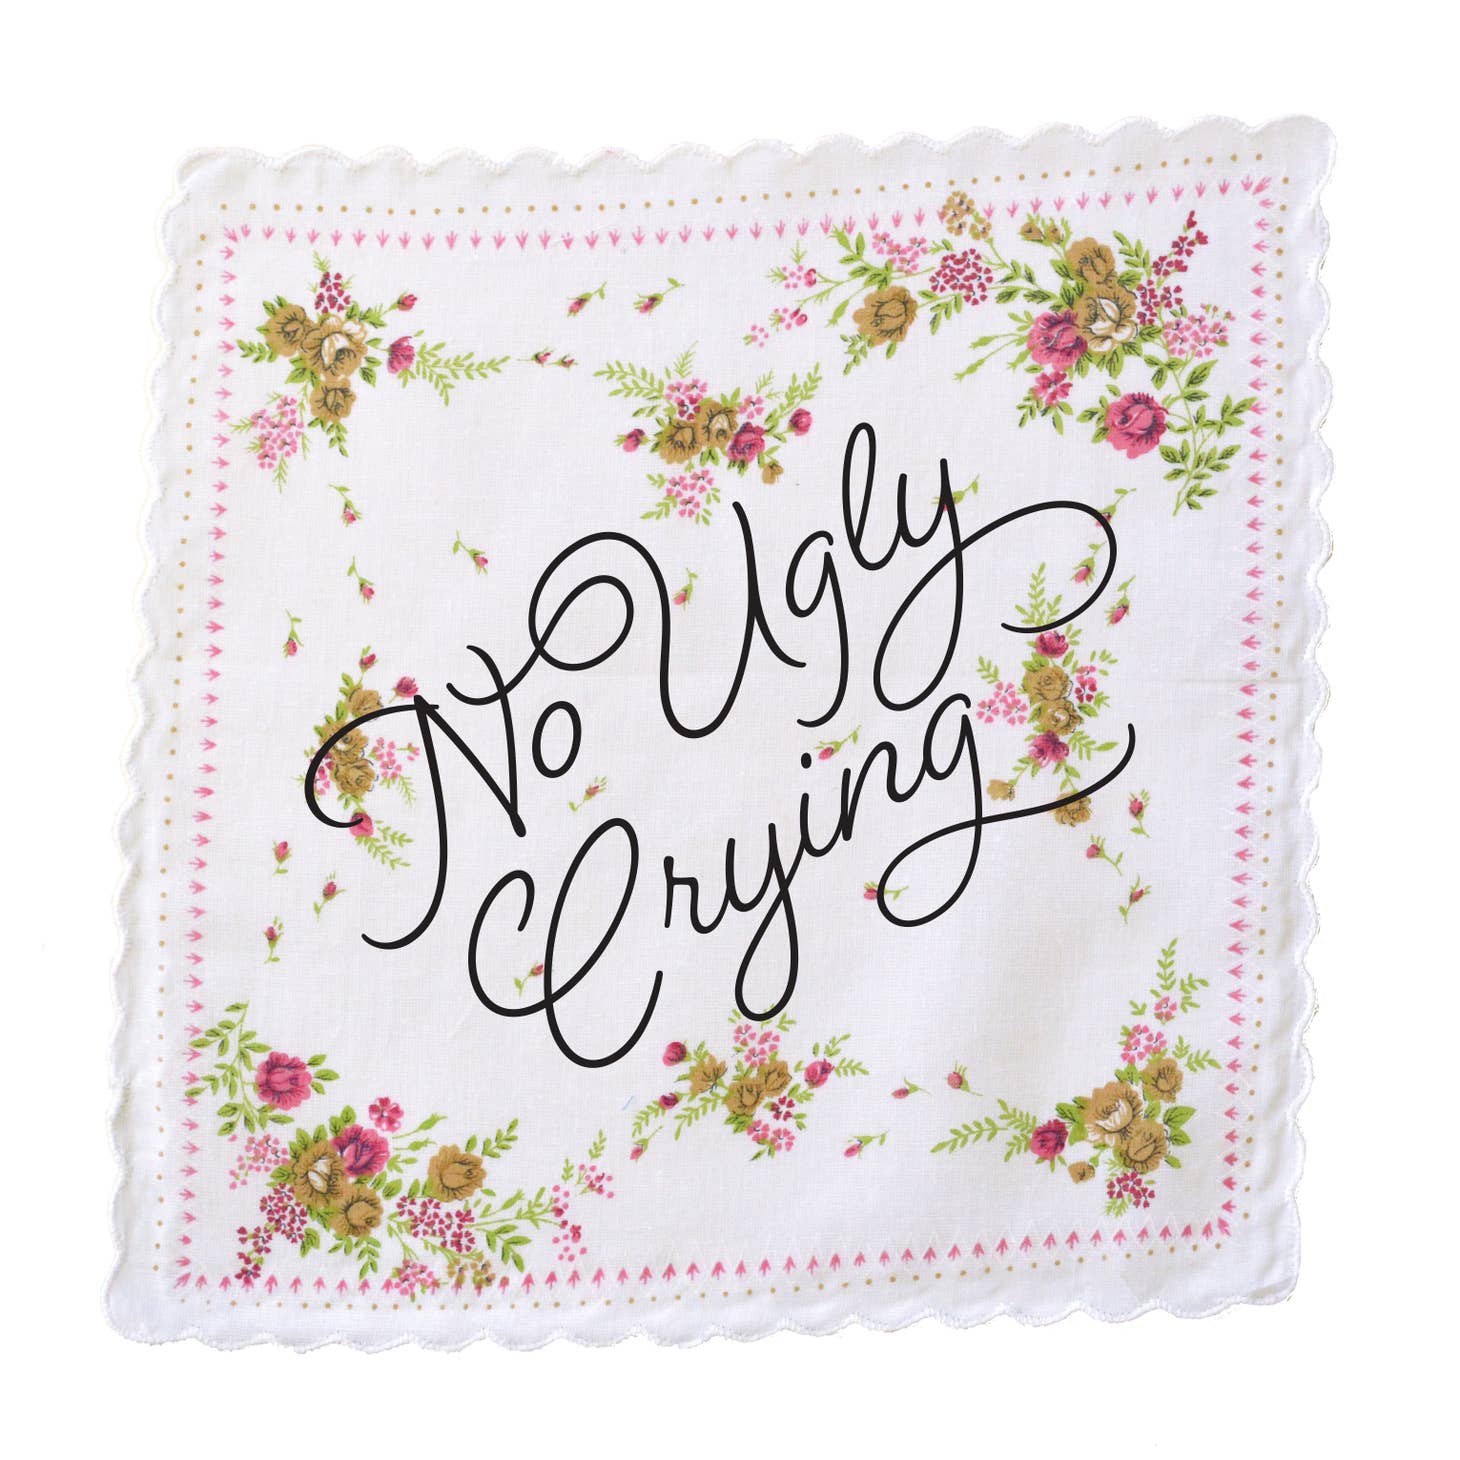 No Ugly Crying Hankie Retro Floral Print Cotton Handkerchief